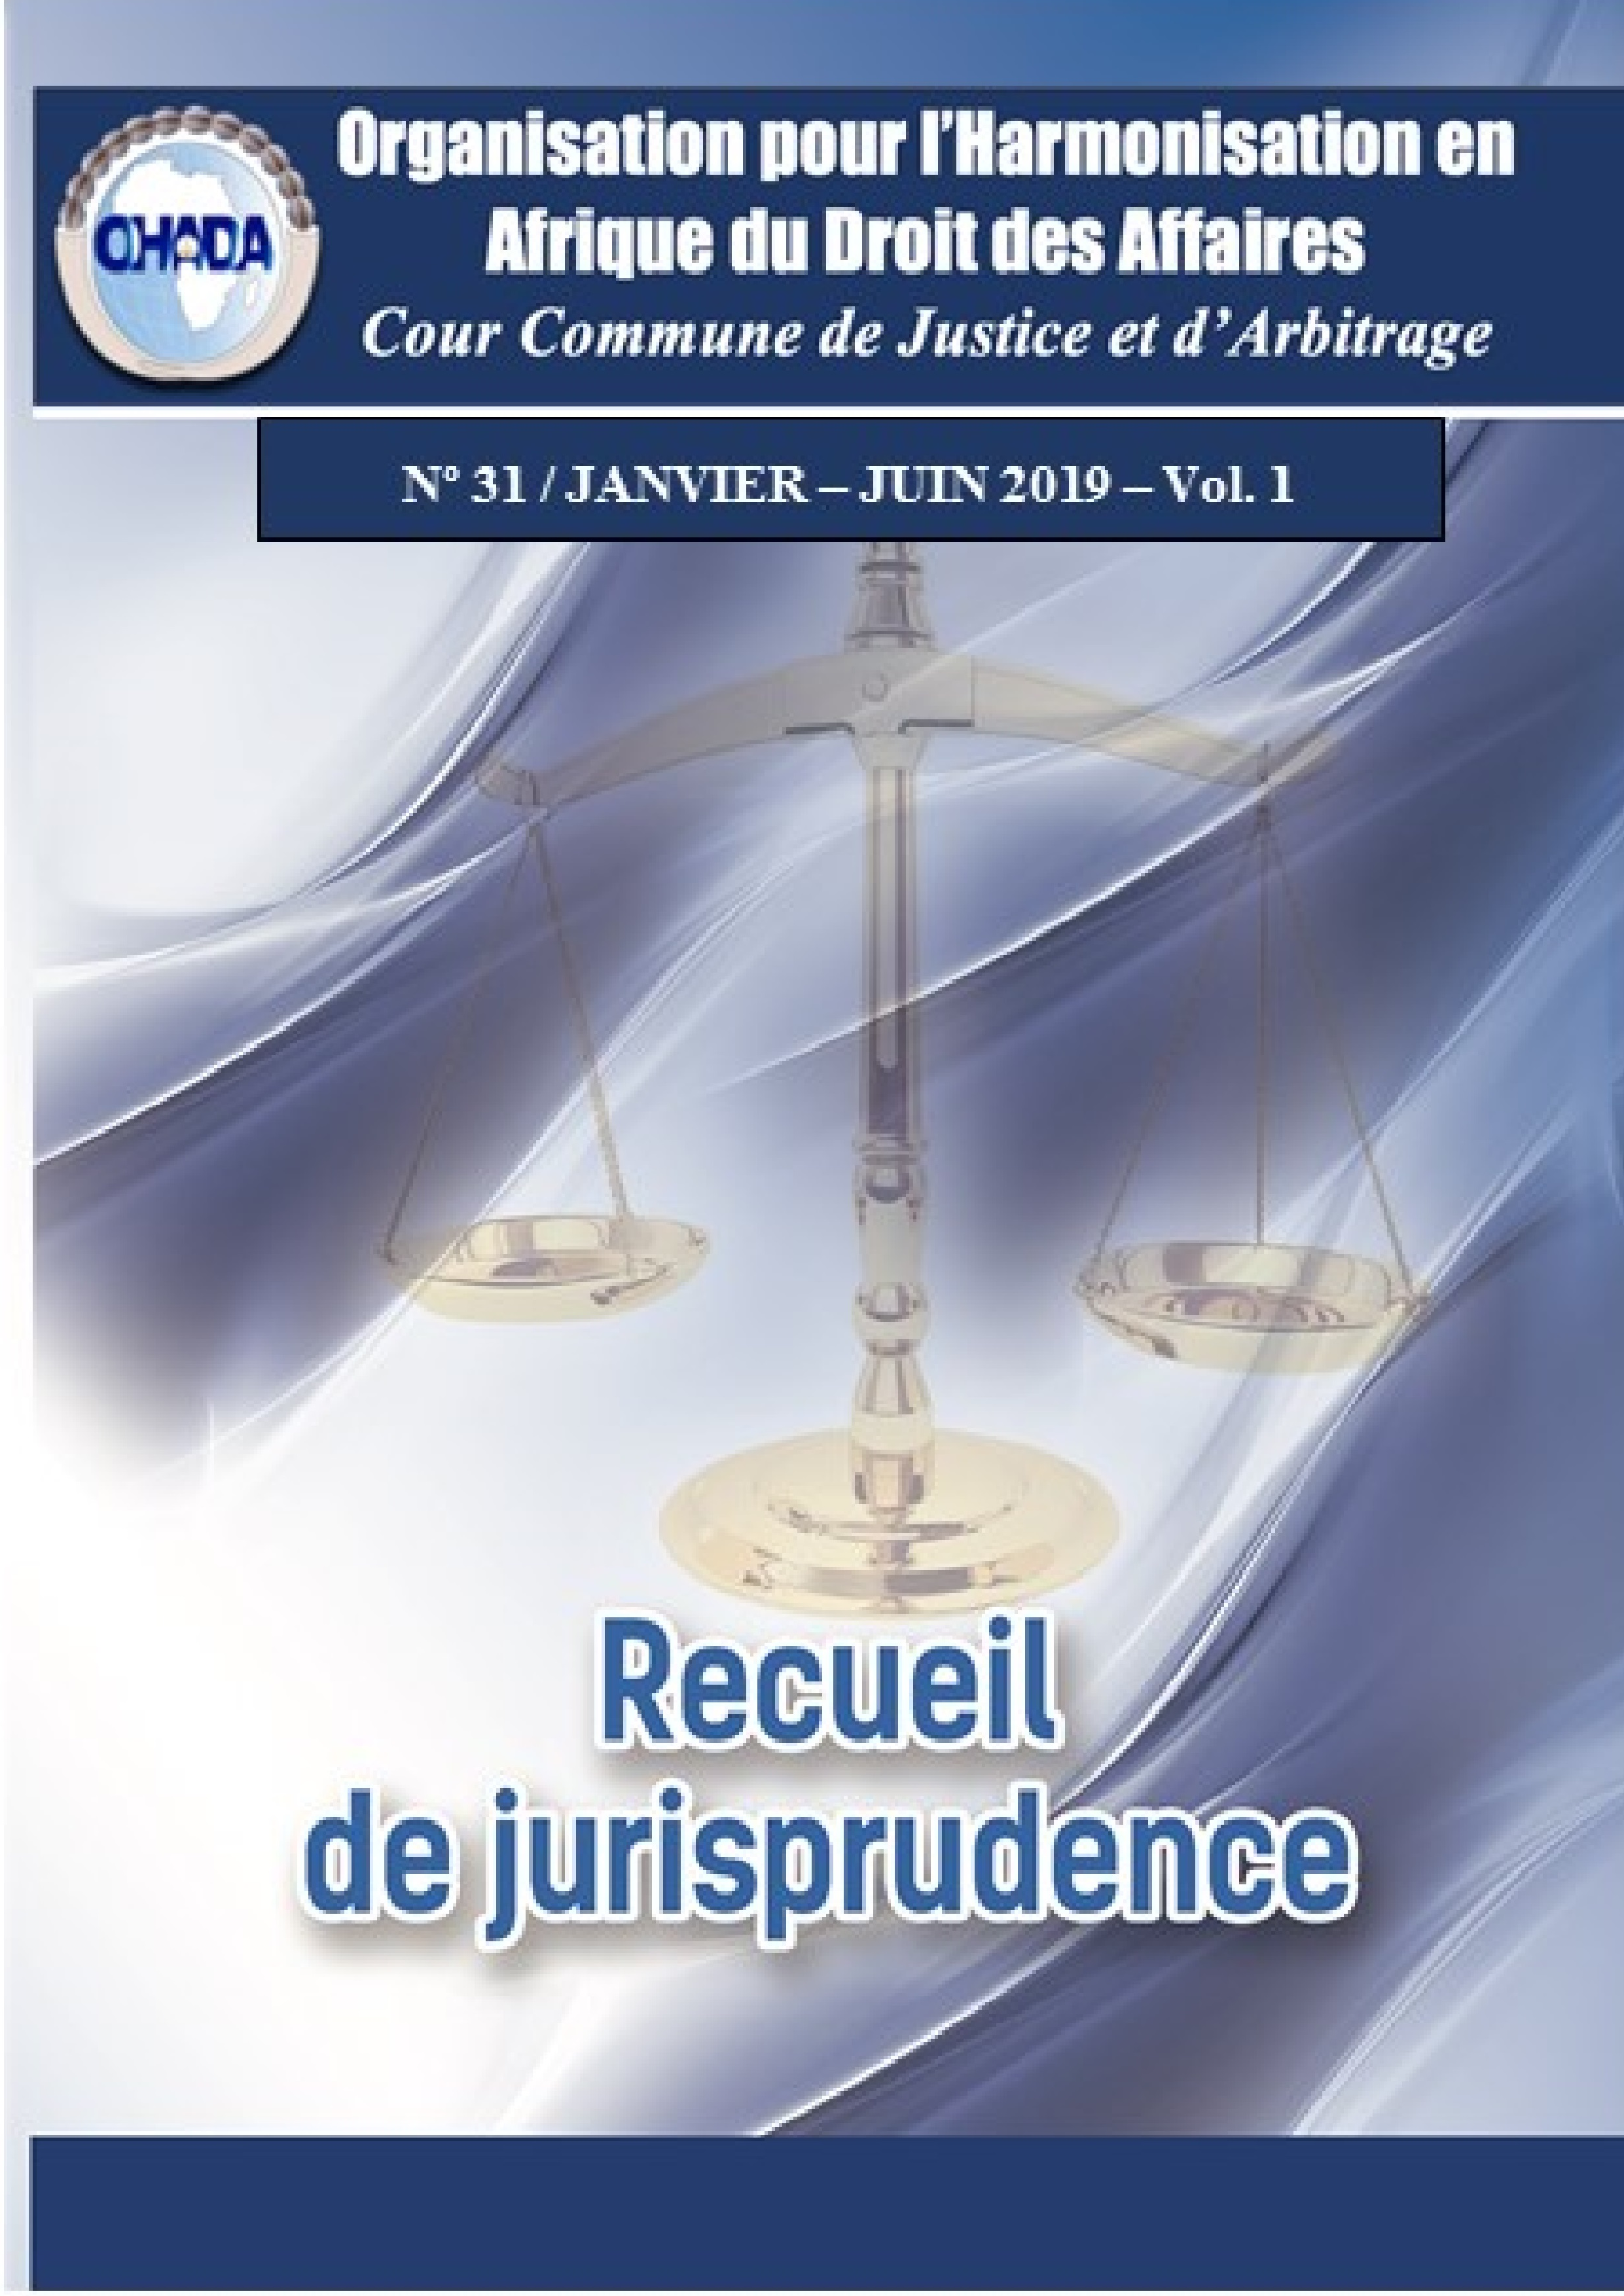 Recueil de jurisprudence n°31, Vol. 1